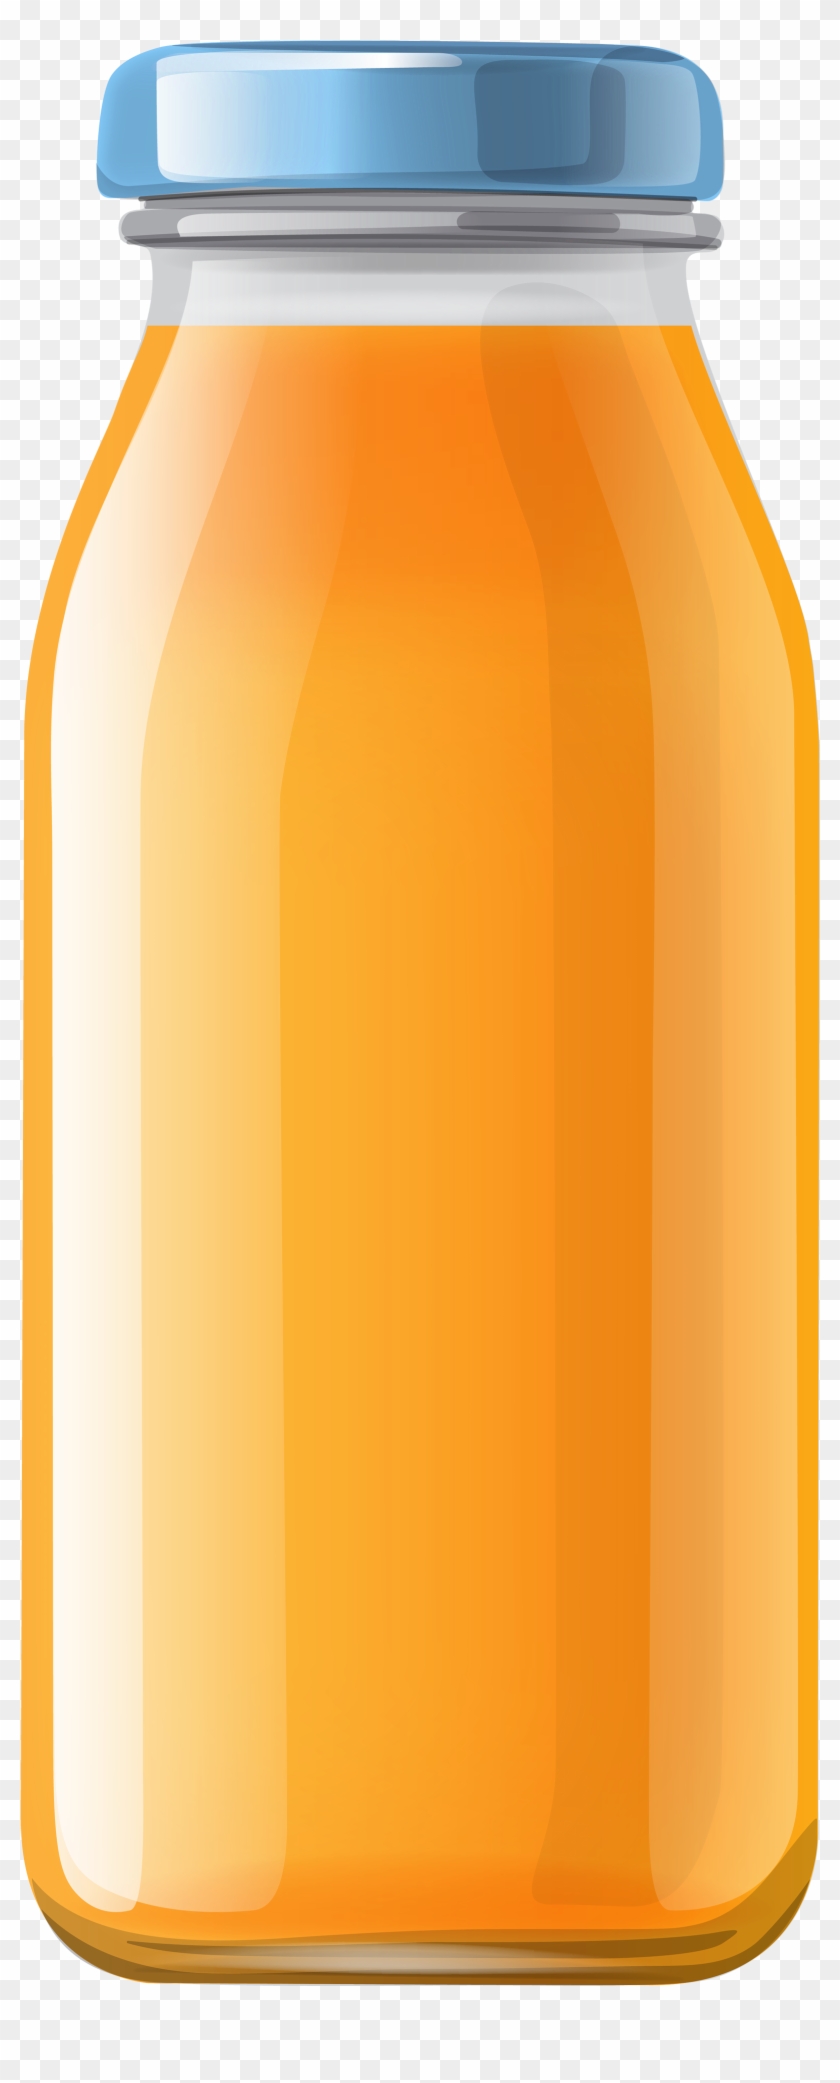 Orange Juice Bottle Clipart - Juice Bottle Vector Png #374142